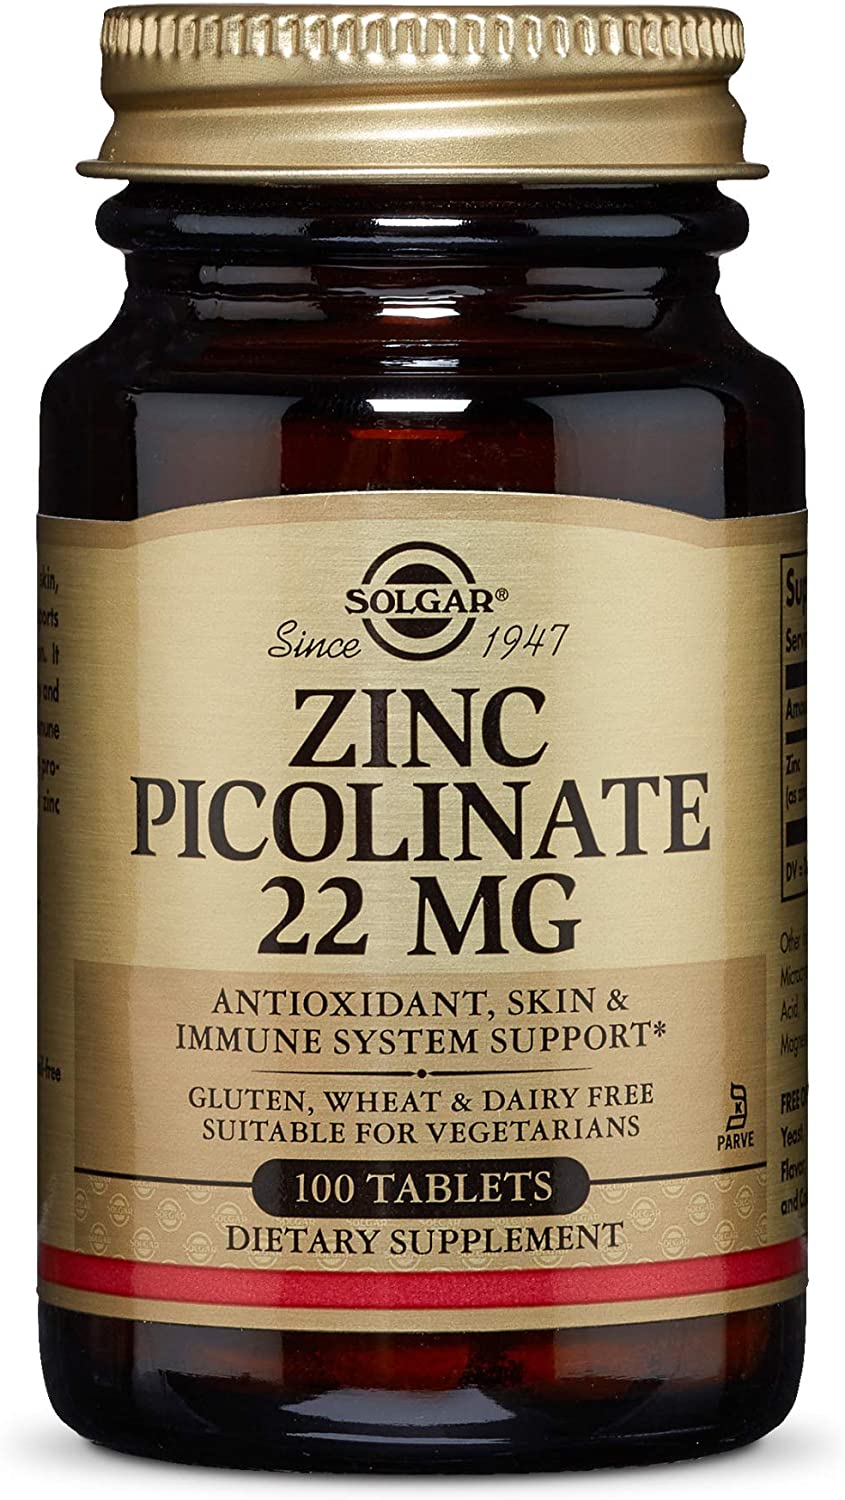 Solgar Zinc Picolinate 22 Mg, 100 Tablets